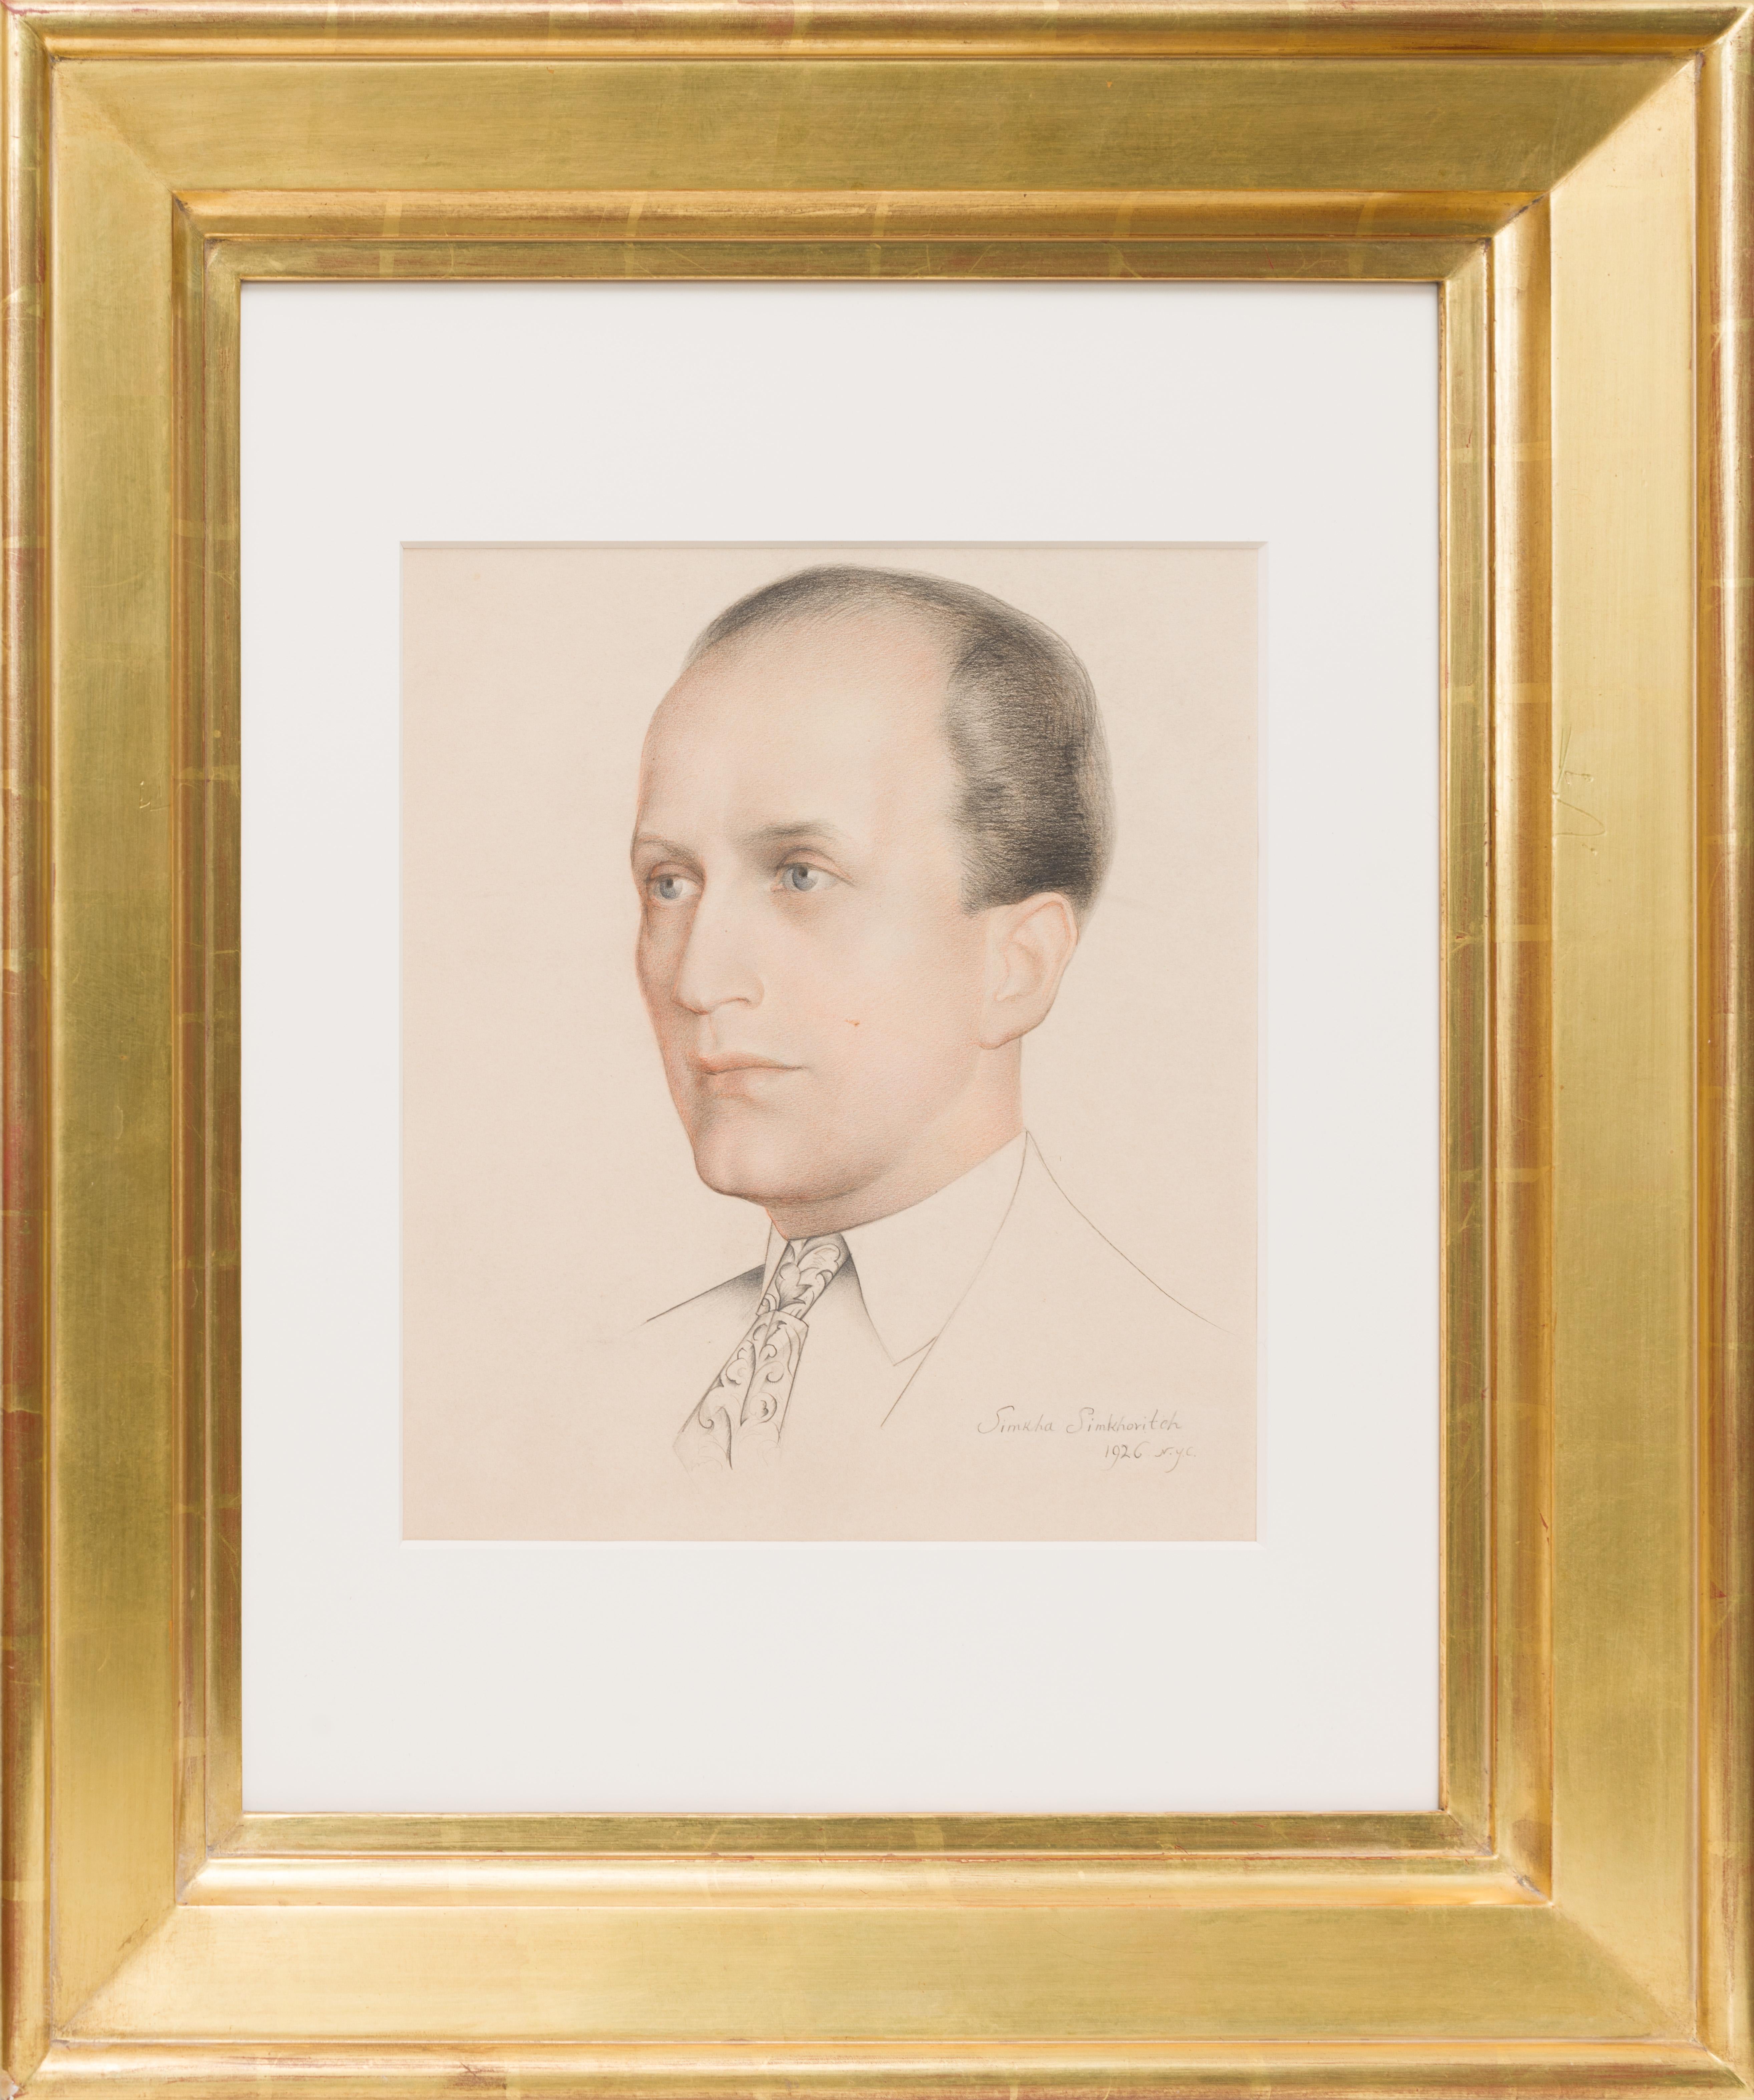 Simka Simkhovitch Portrait - Head of a Gentleman sketch, mid modern